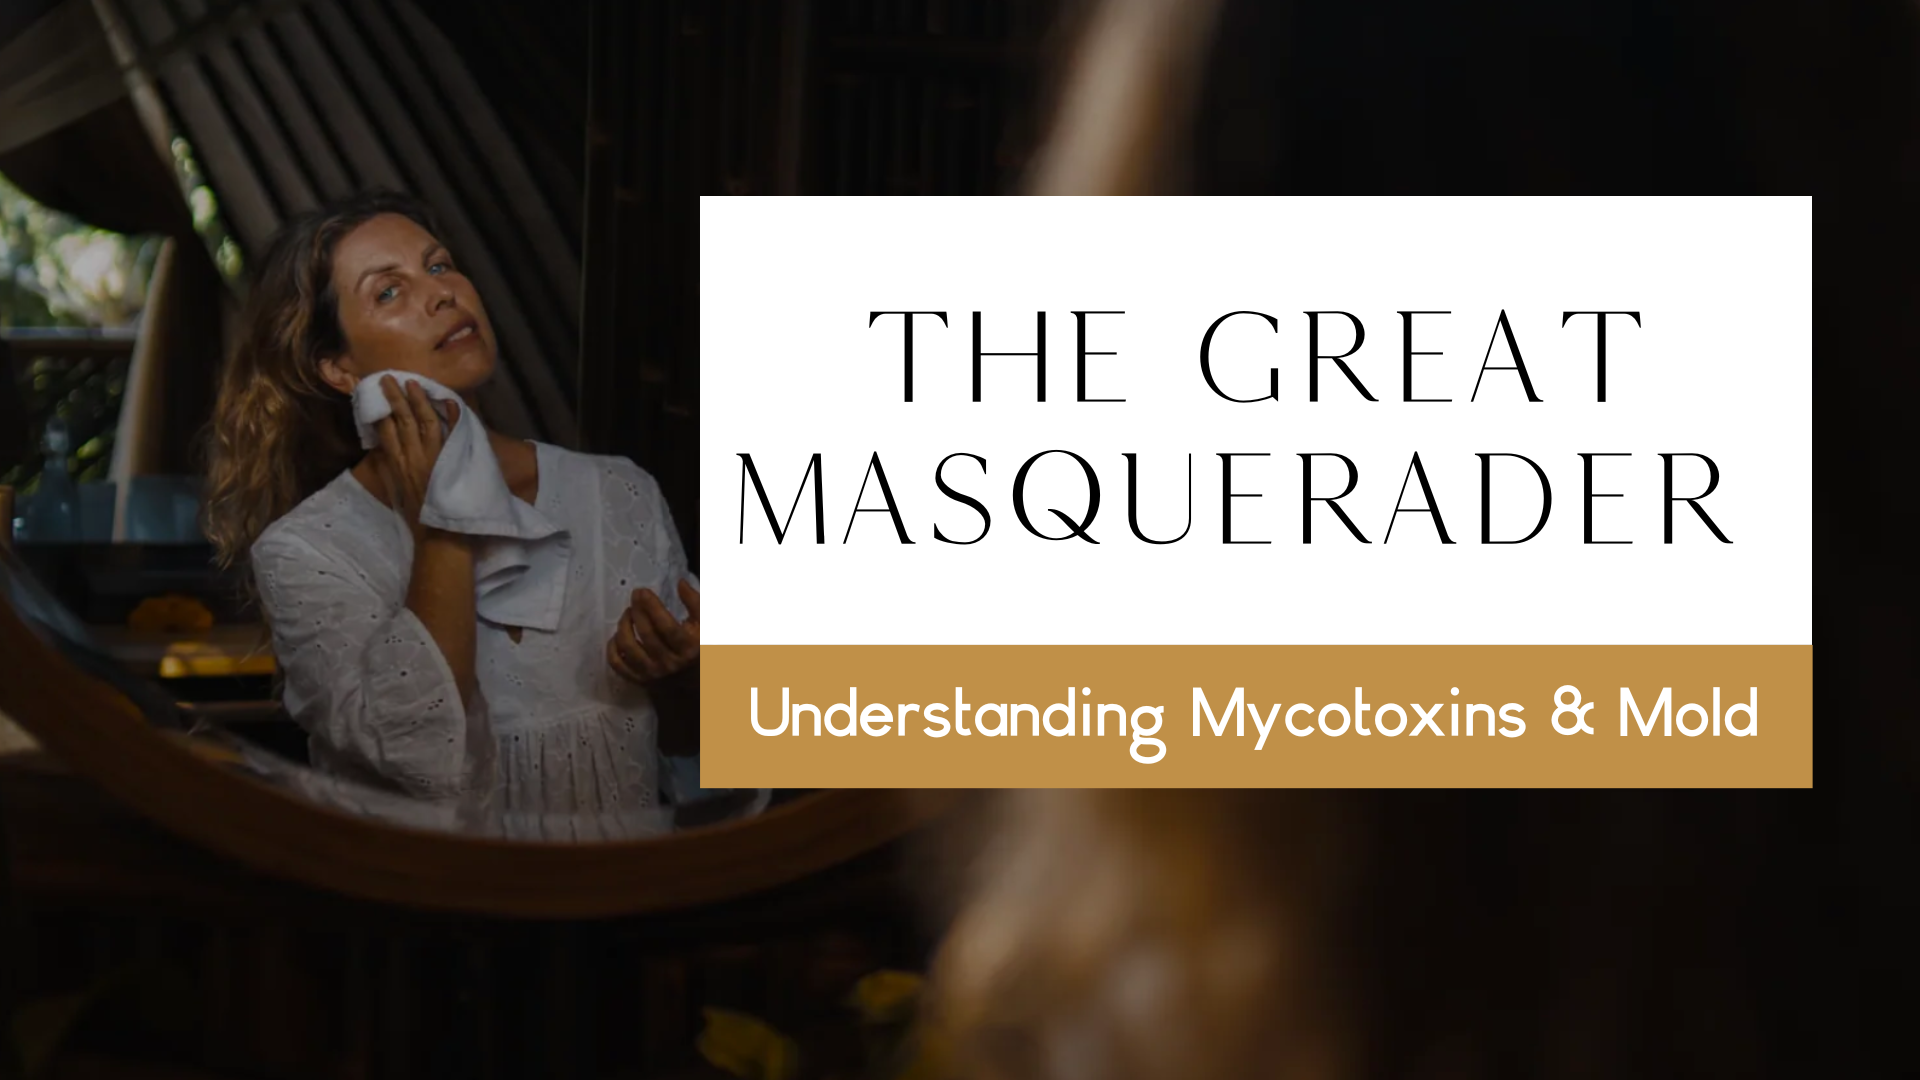 The Great Masquerader - Understanding Mycotoxins & Mold